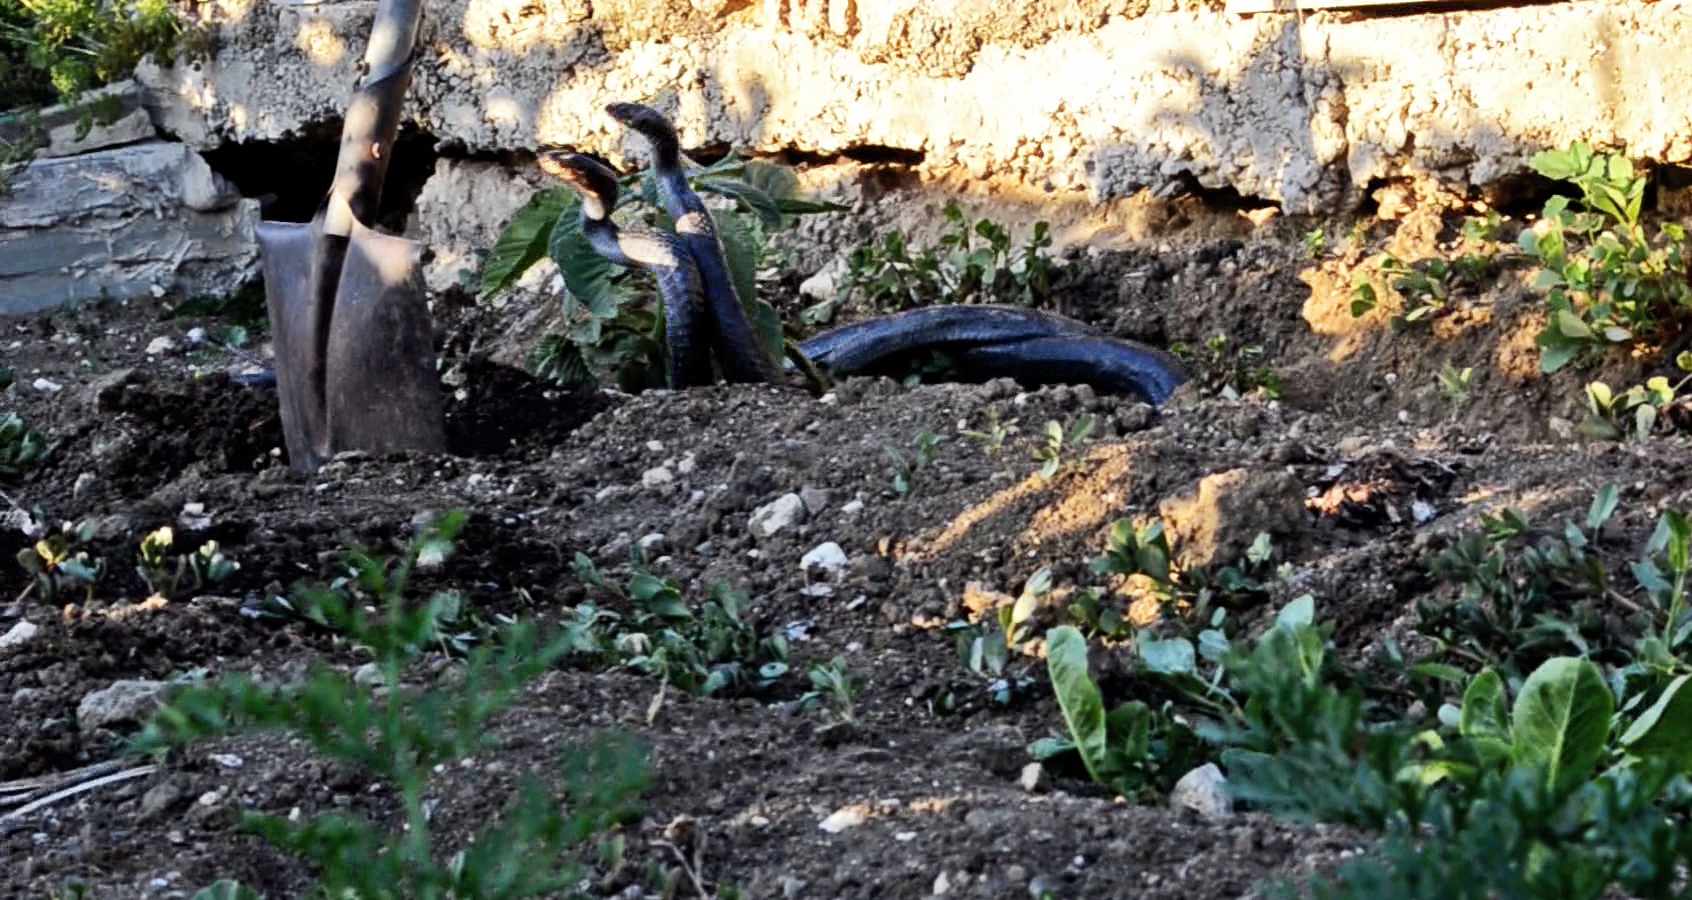 The Cyprus Black Whip Snake